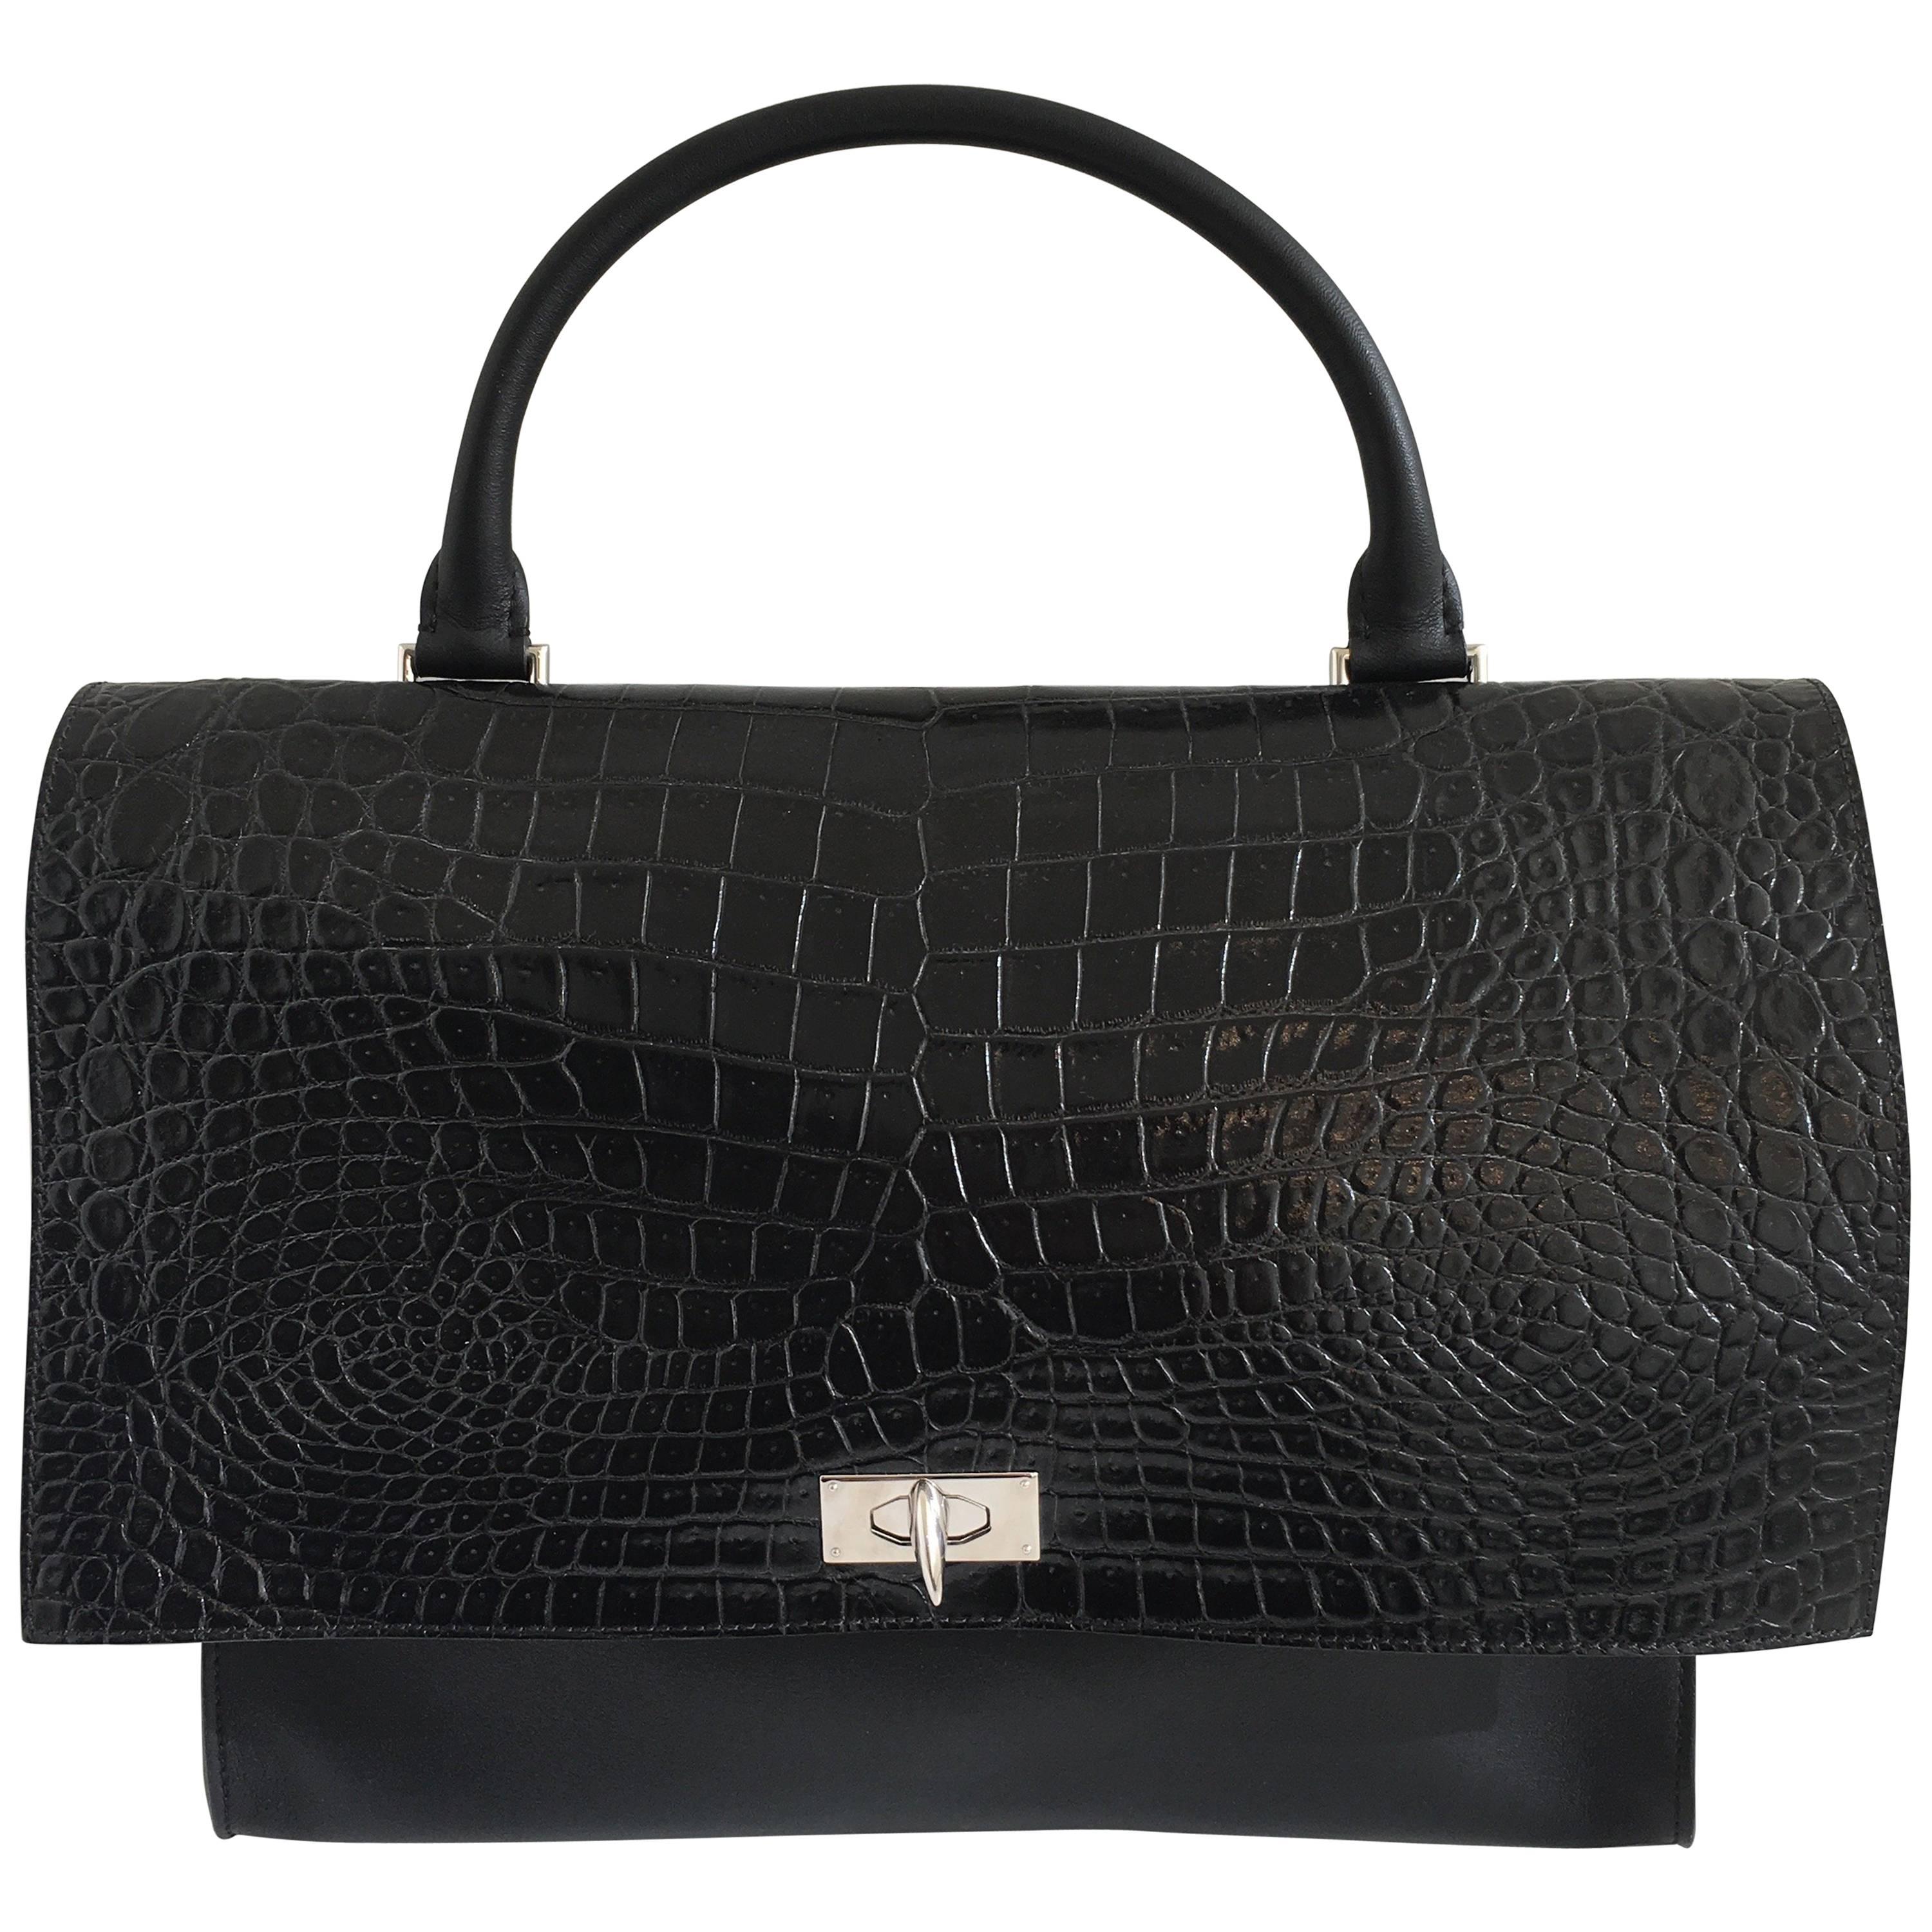 Givenchy Black Medium Shark Bag